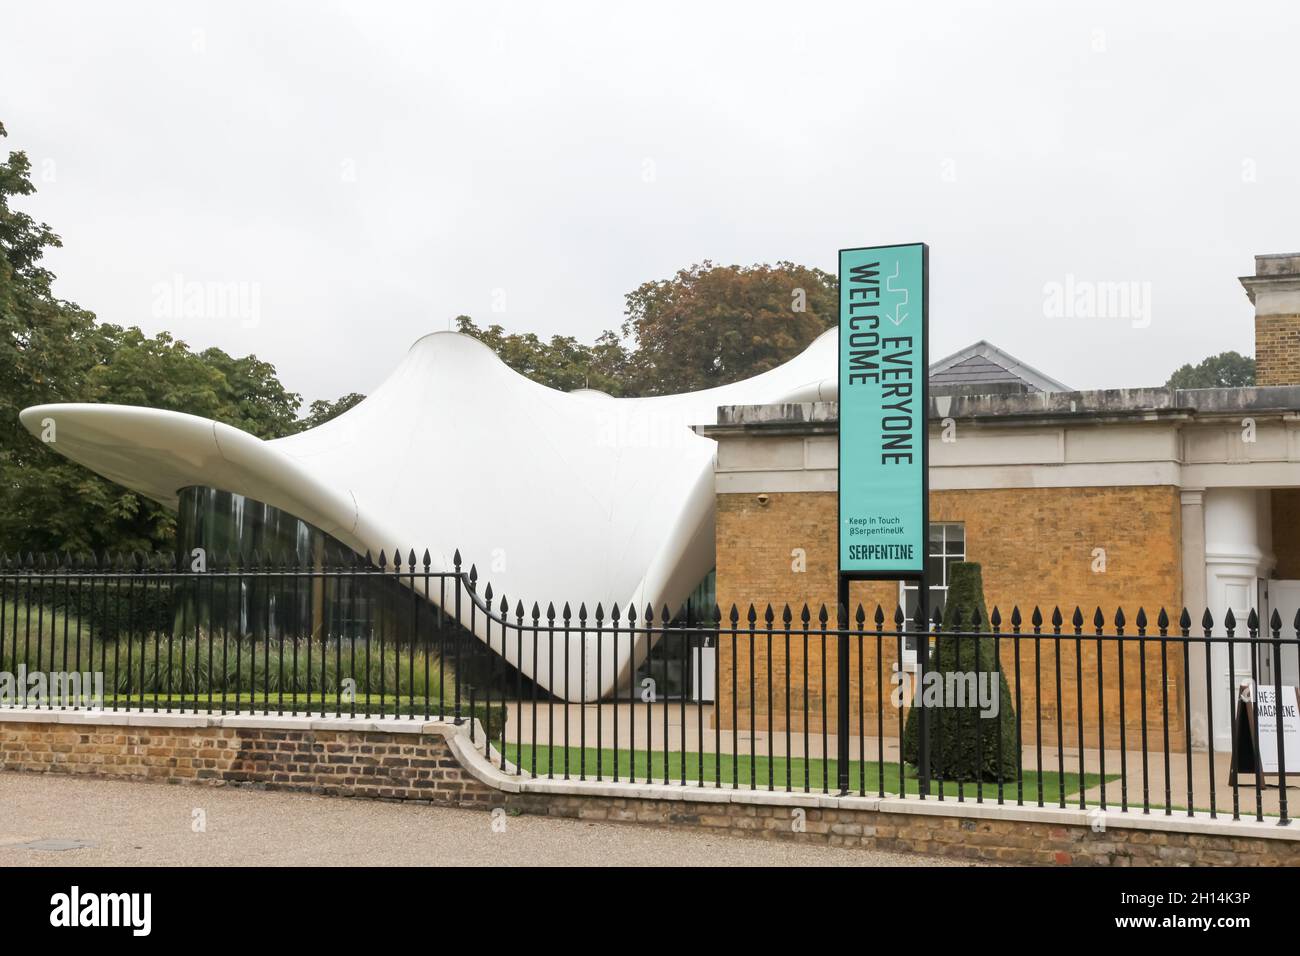 Serpentine Sackler Gallery su West Carriage Drive a Hyde Park, Londra, Inghilterra, ottobre 2021 Foto Stock